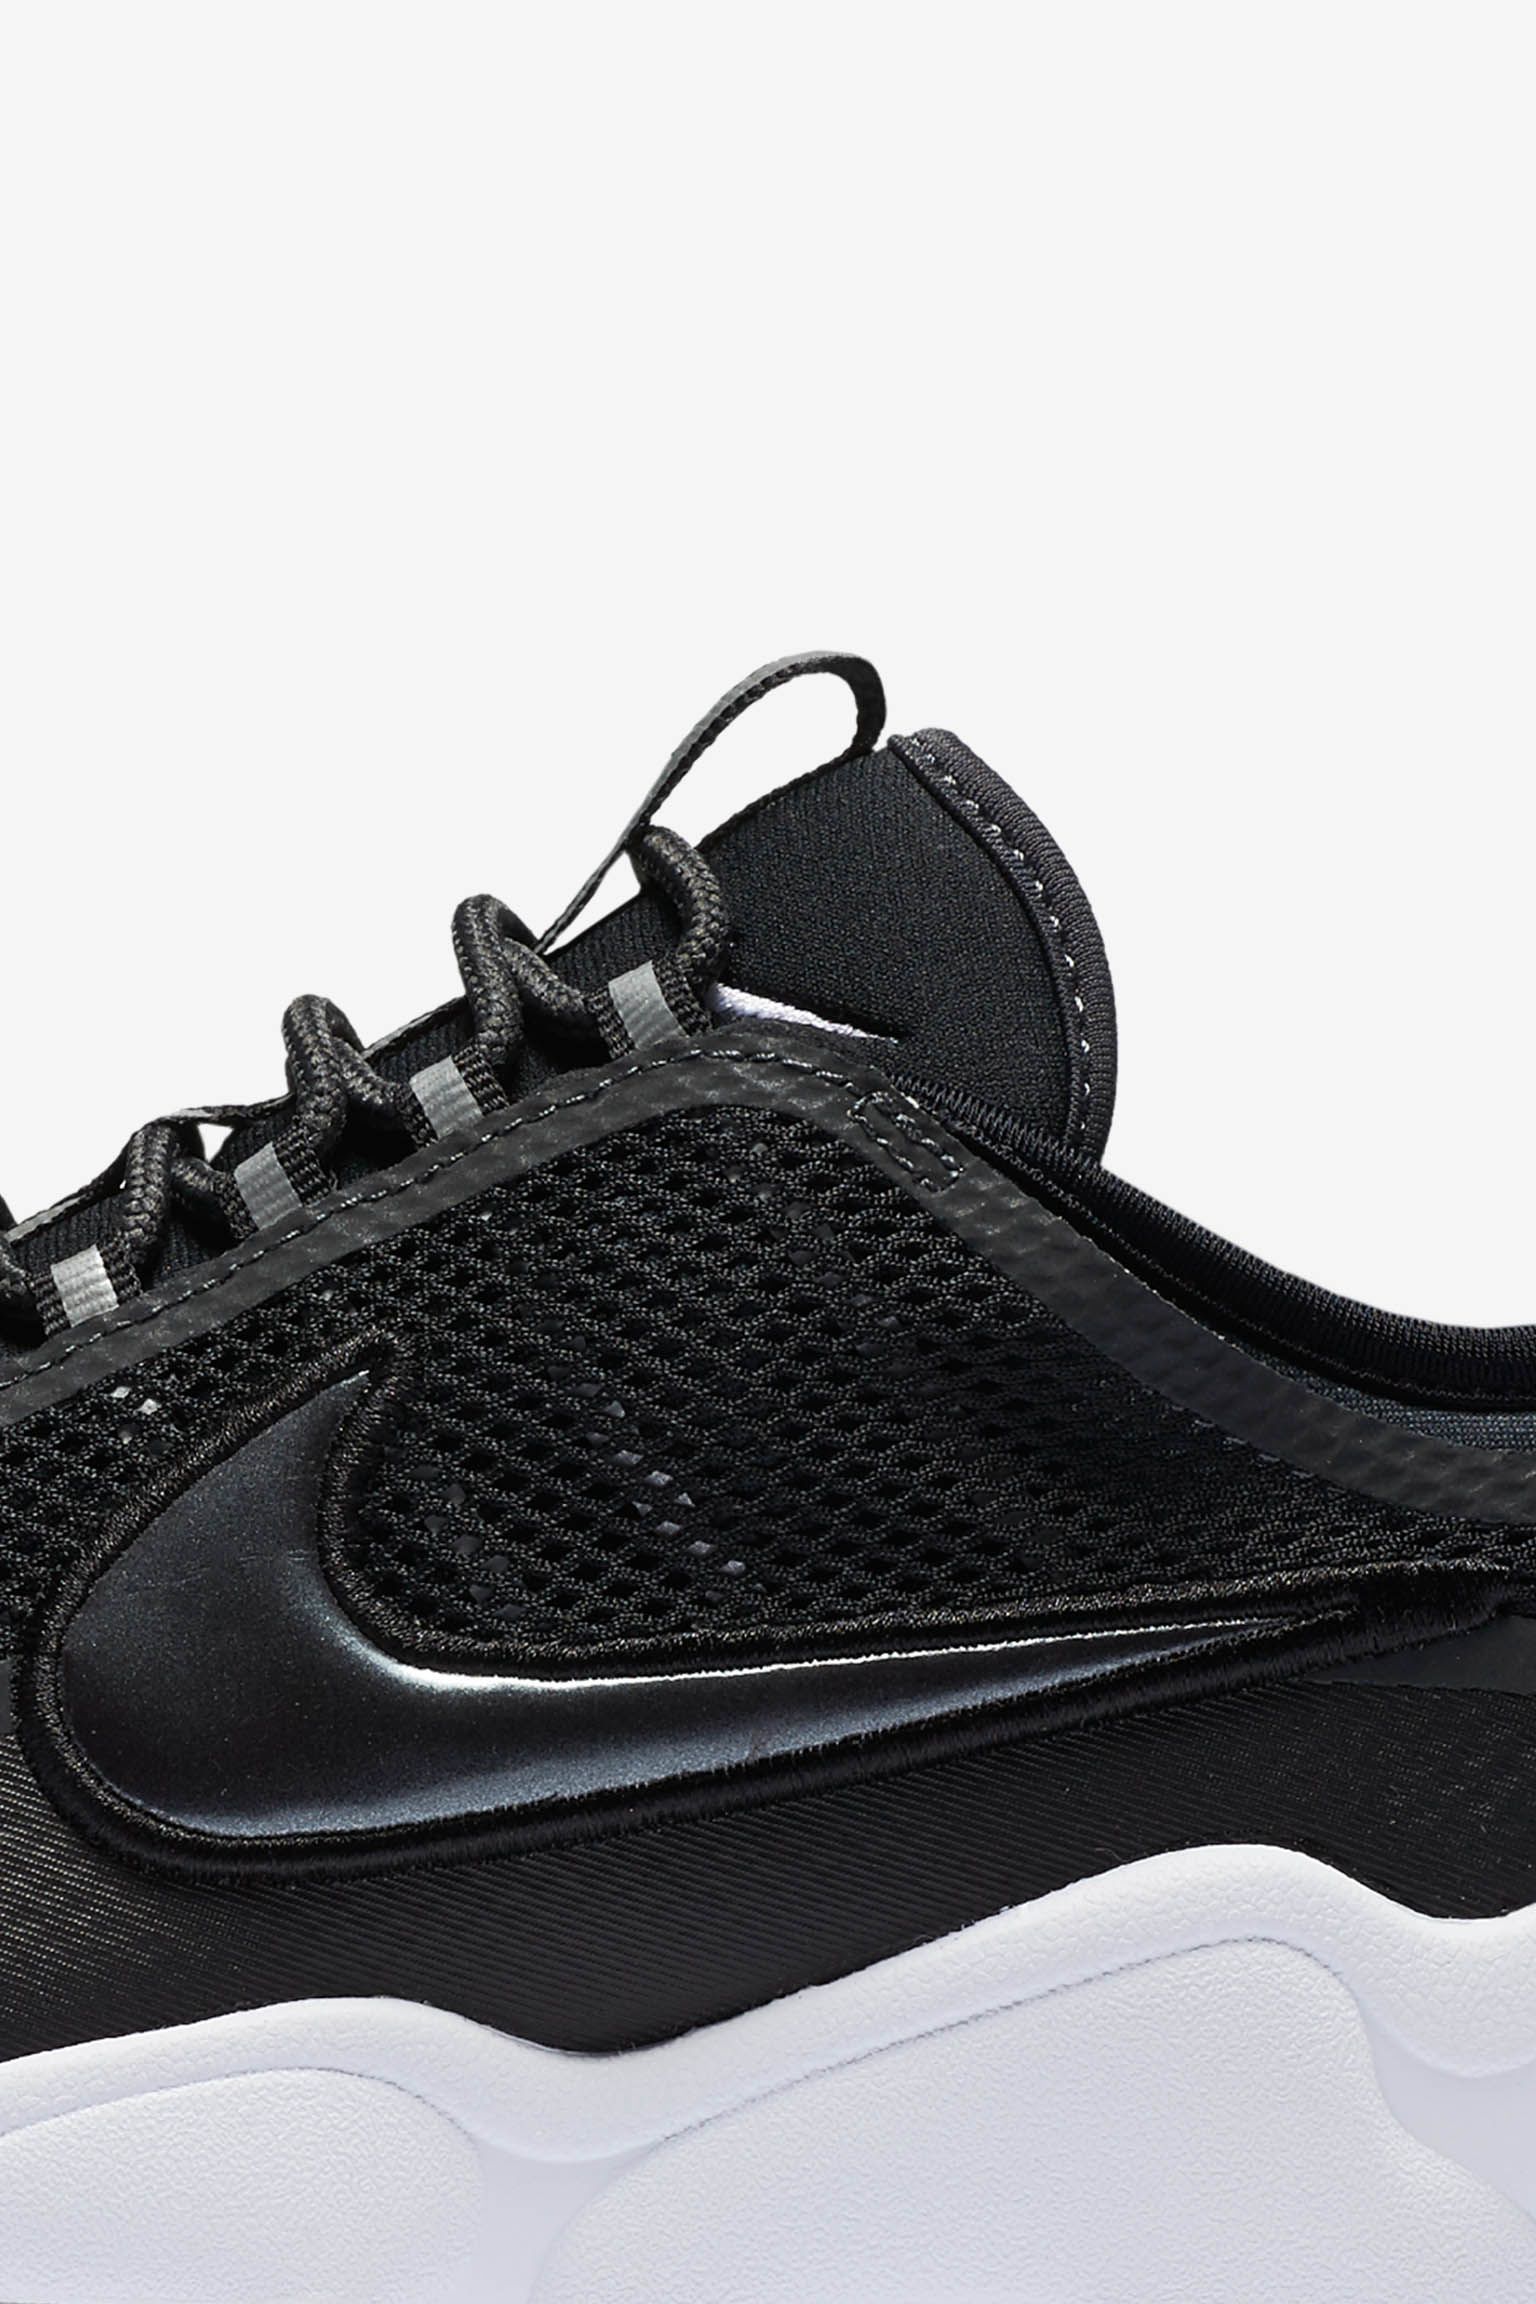 Air Zoom Spiridon 'Black & Anthracite'. Nike SNKRS